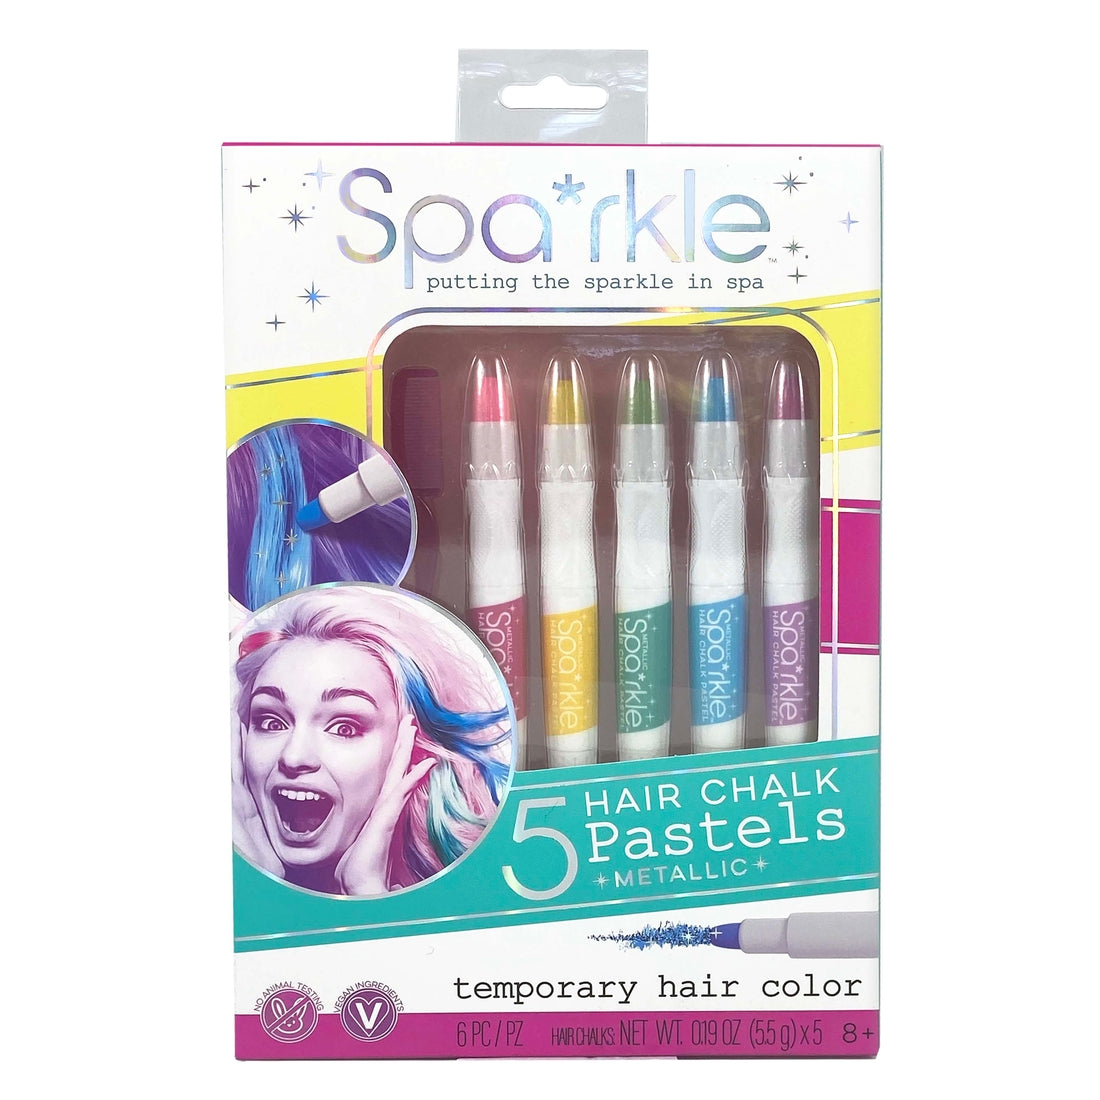 Spa*rkle Hair Chalk Metallic Pastels